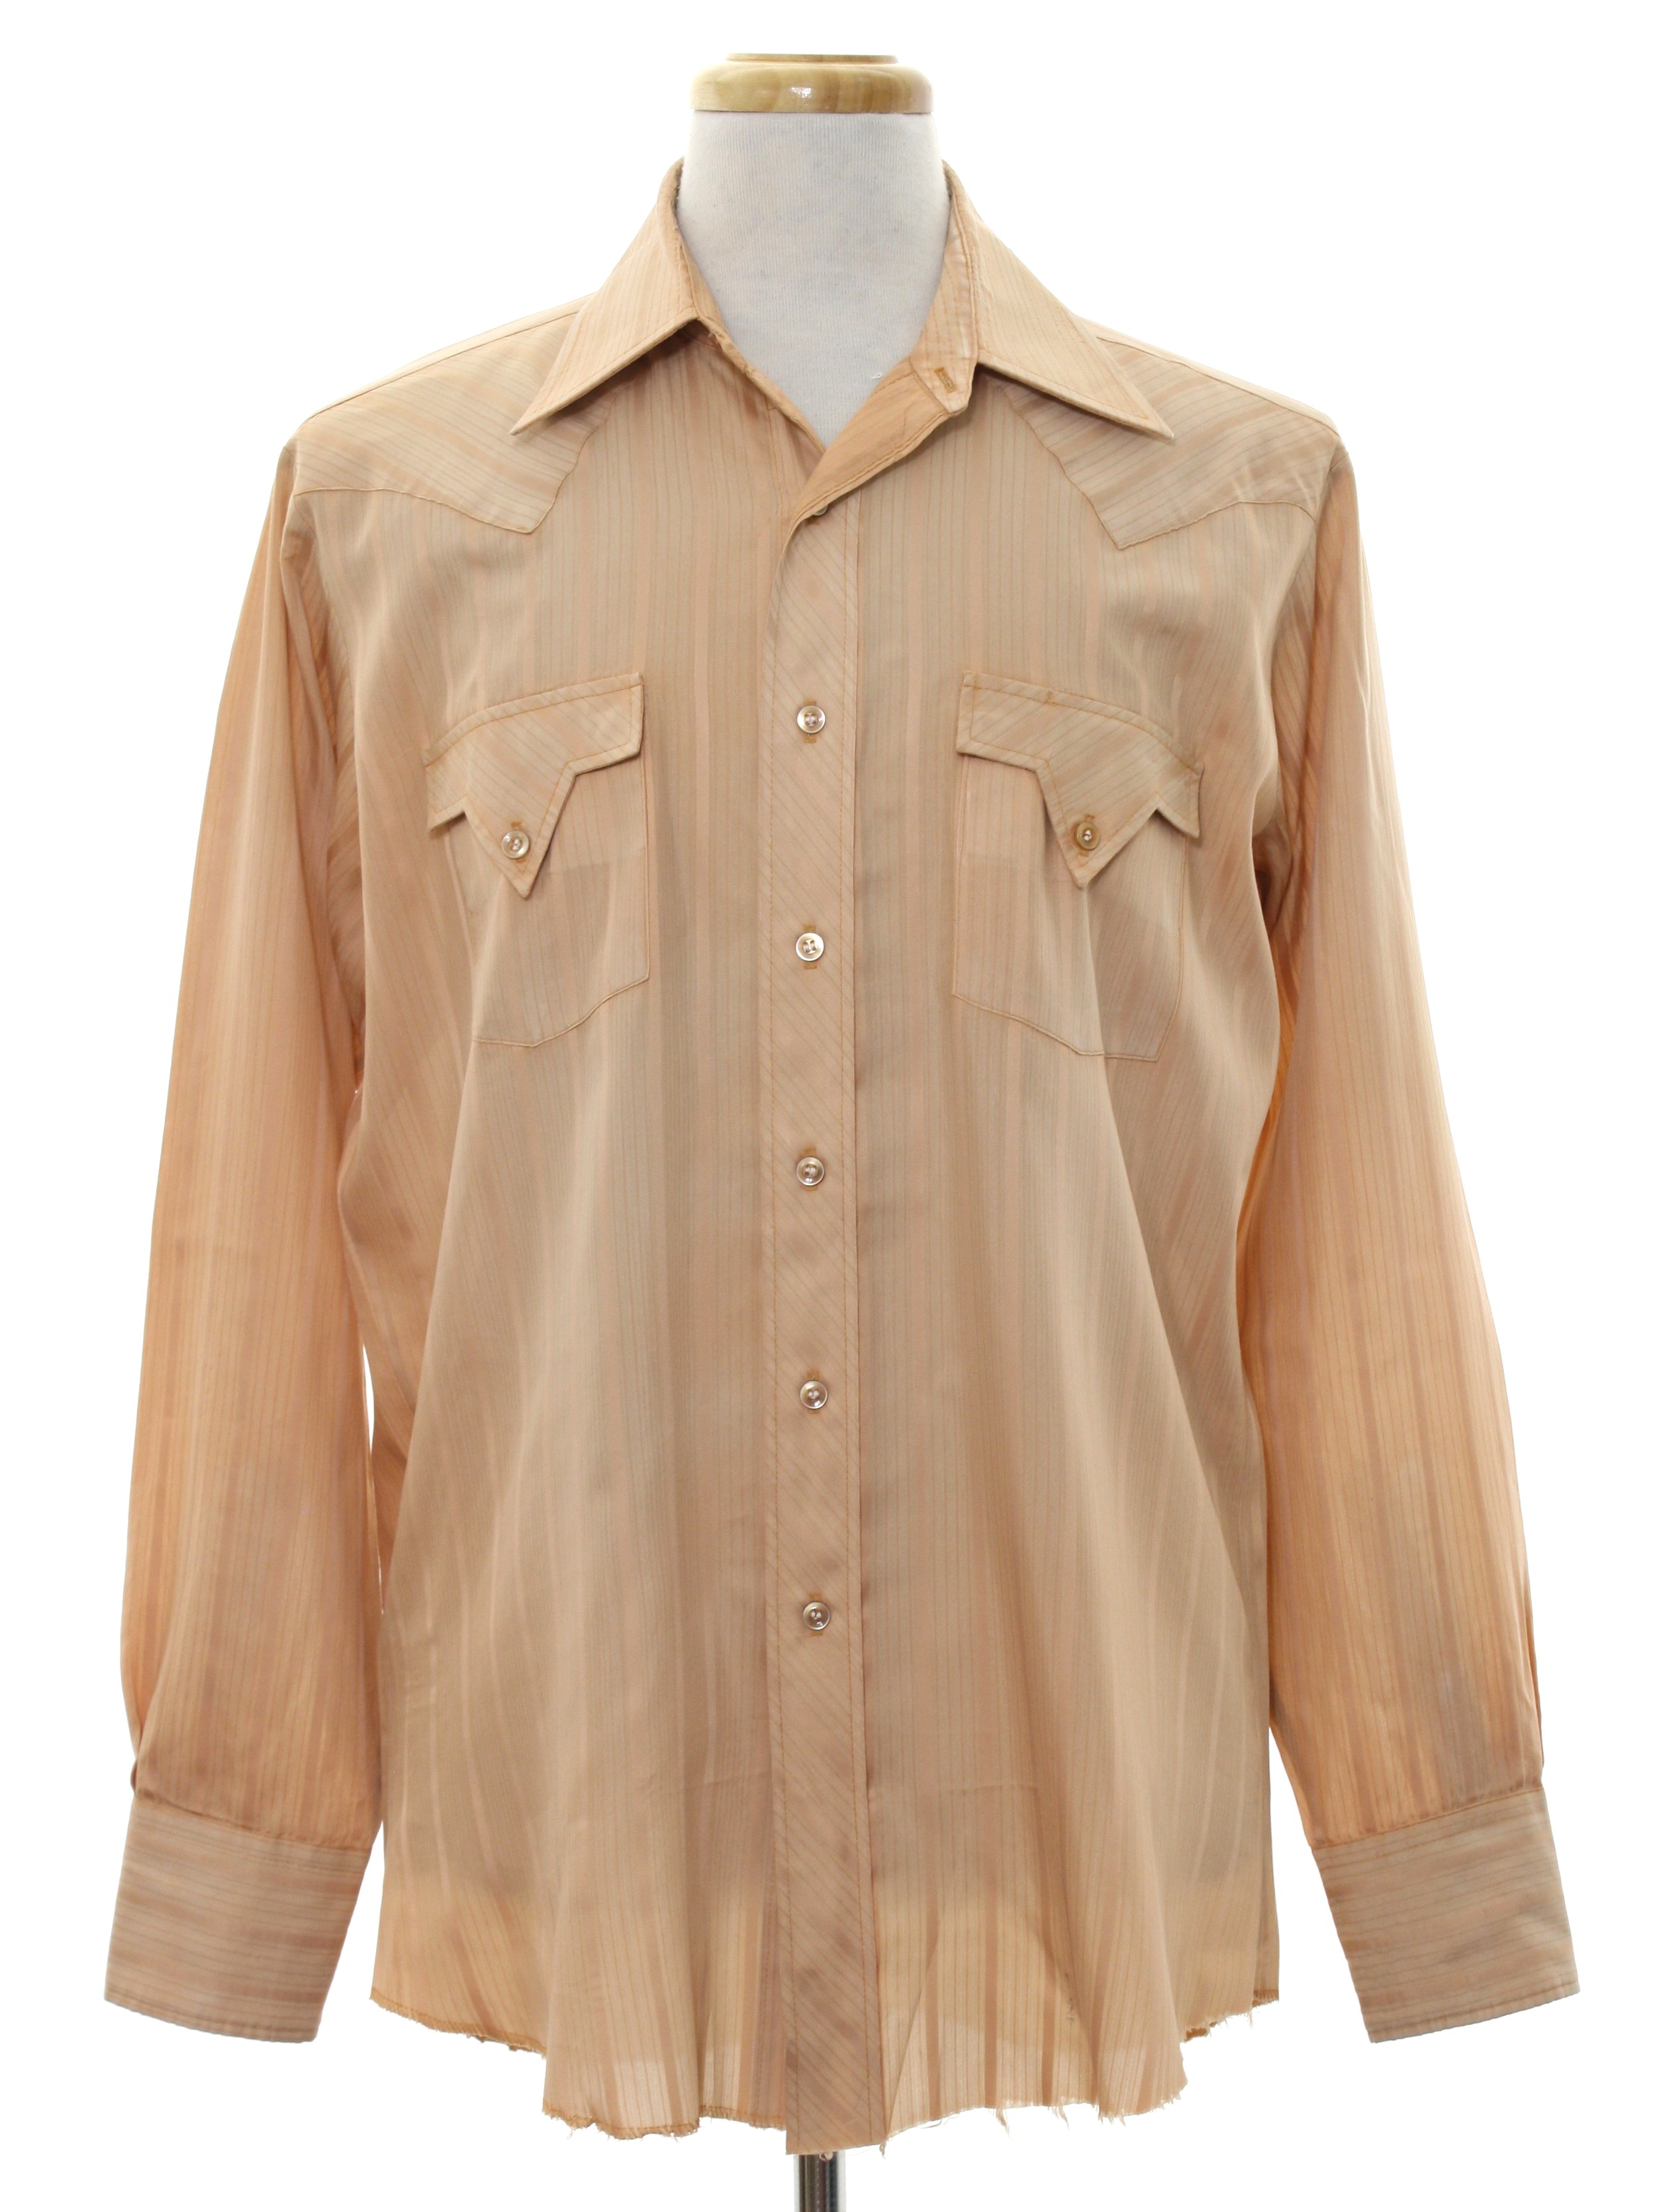 1970's Retro Western Shirt: Late 70s -Cutter Bill- Mens peachy tan